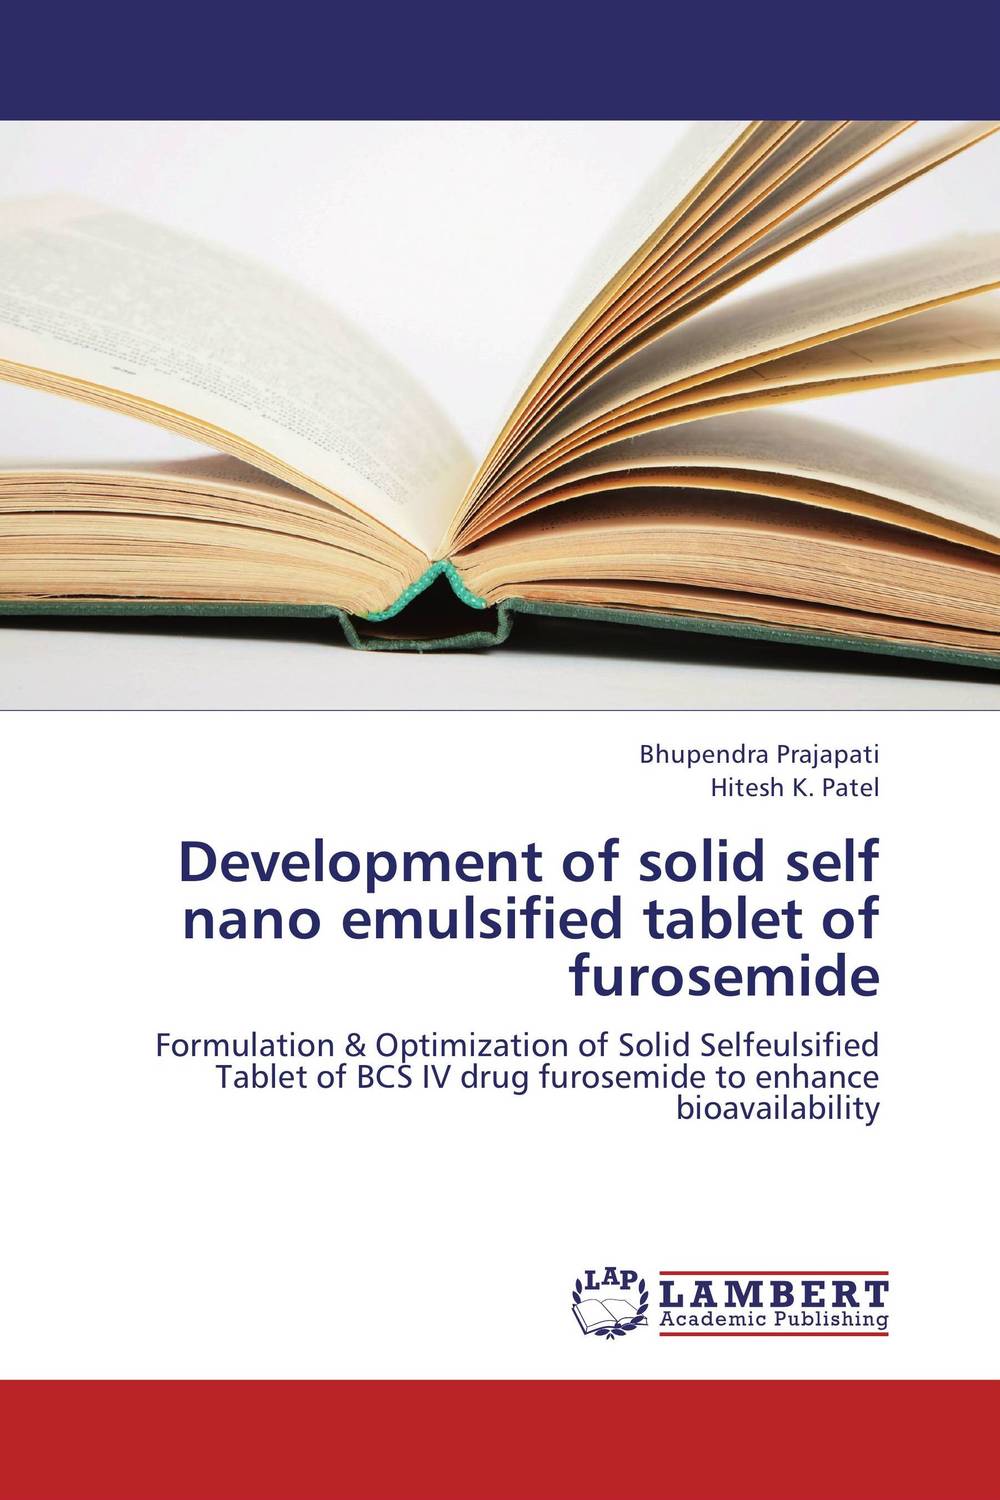 Development of solid self nano emulsified tablet of furosemide